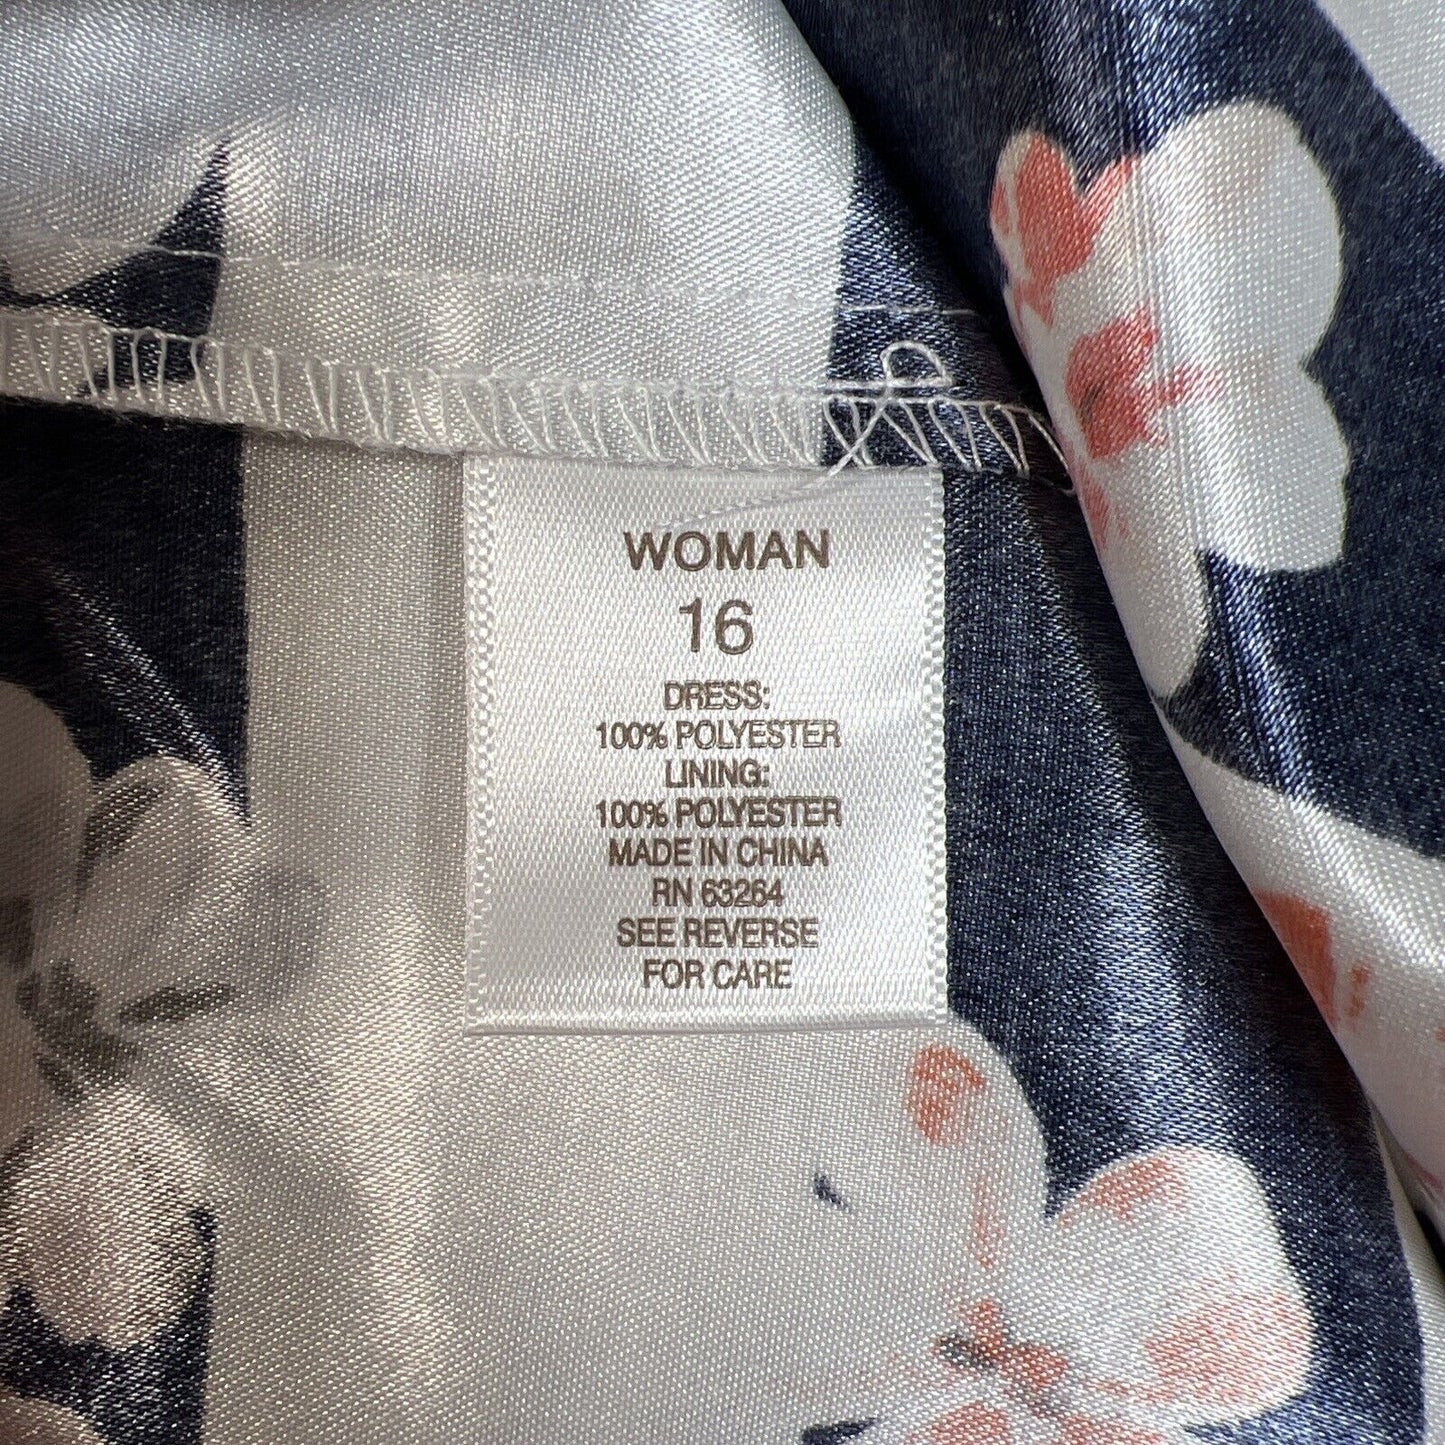 NEW Dressbarn Women's White/Blue Floral Sleeveless A-Line Dress - 16 Plus